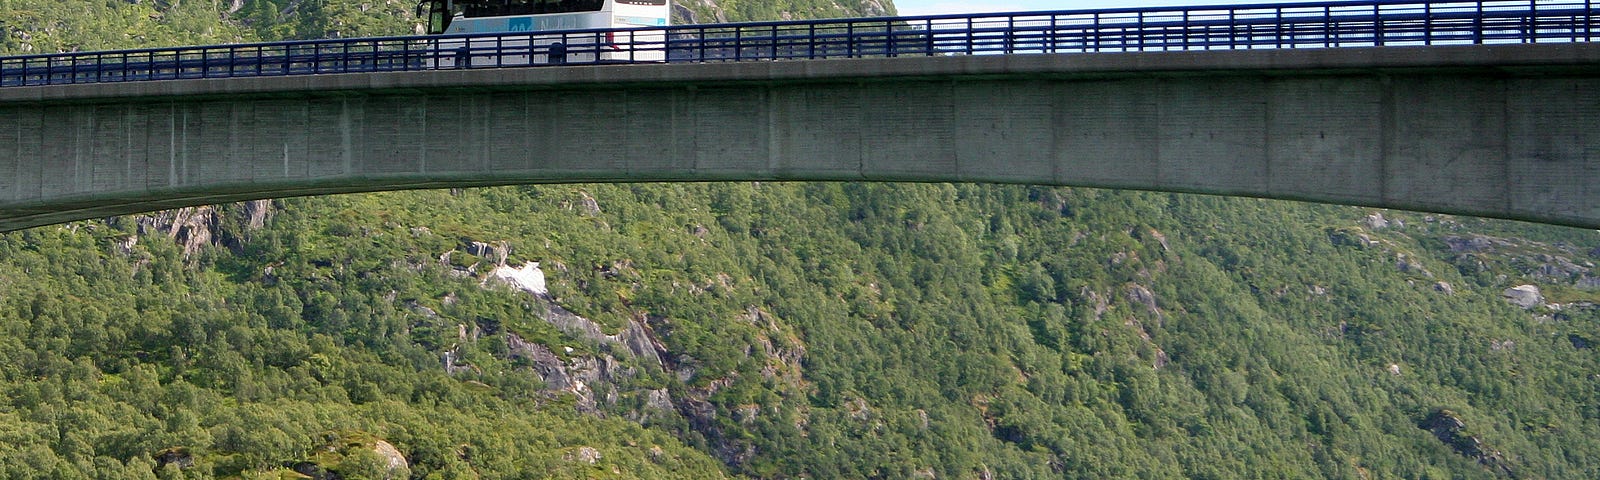 Bus on a Bridge